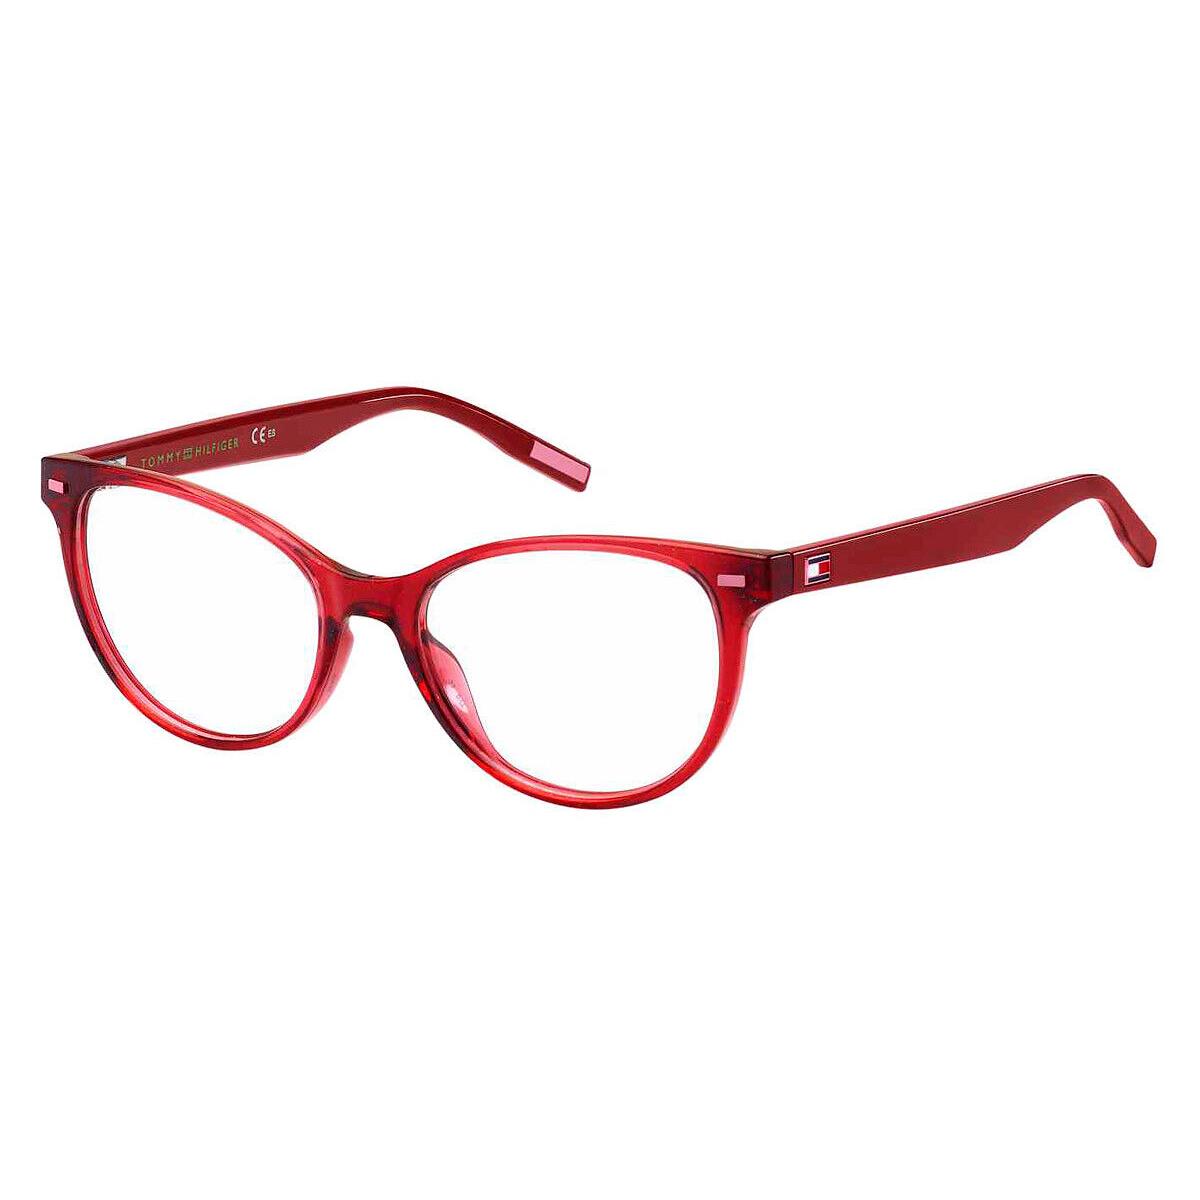 Tommy Hilfiger Thf Eyeglasses Kids Red Glitter 48mm - Frame: Red Glitter, Lens: Demo